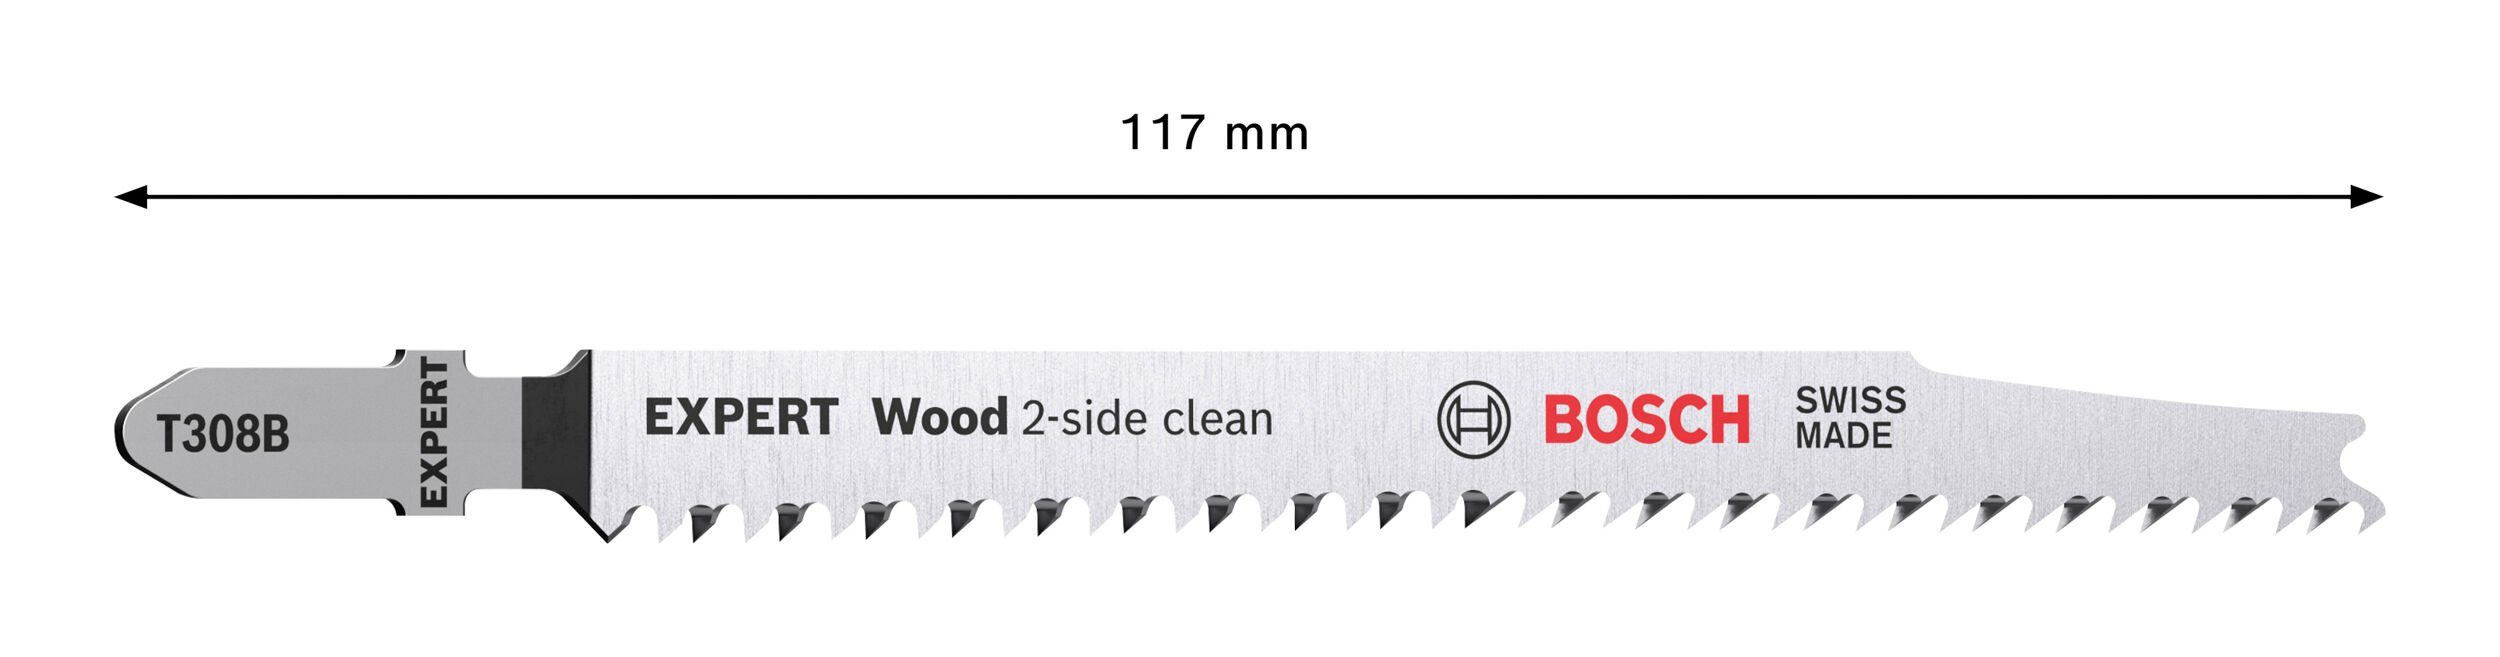 BOSCH Stichsägeblatt 2-side, Expert Stichsägen B, 25 T "Wood Wood 308 clean" Expert Stück 2-side für